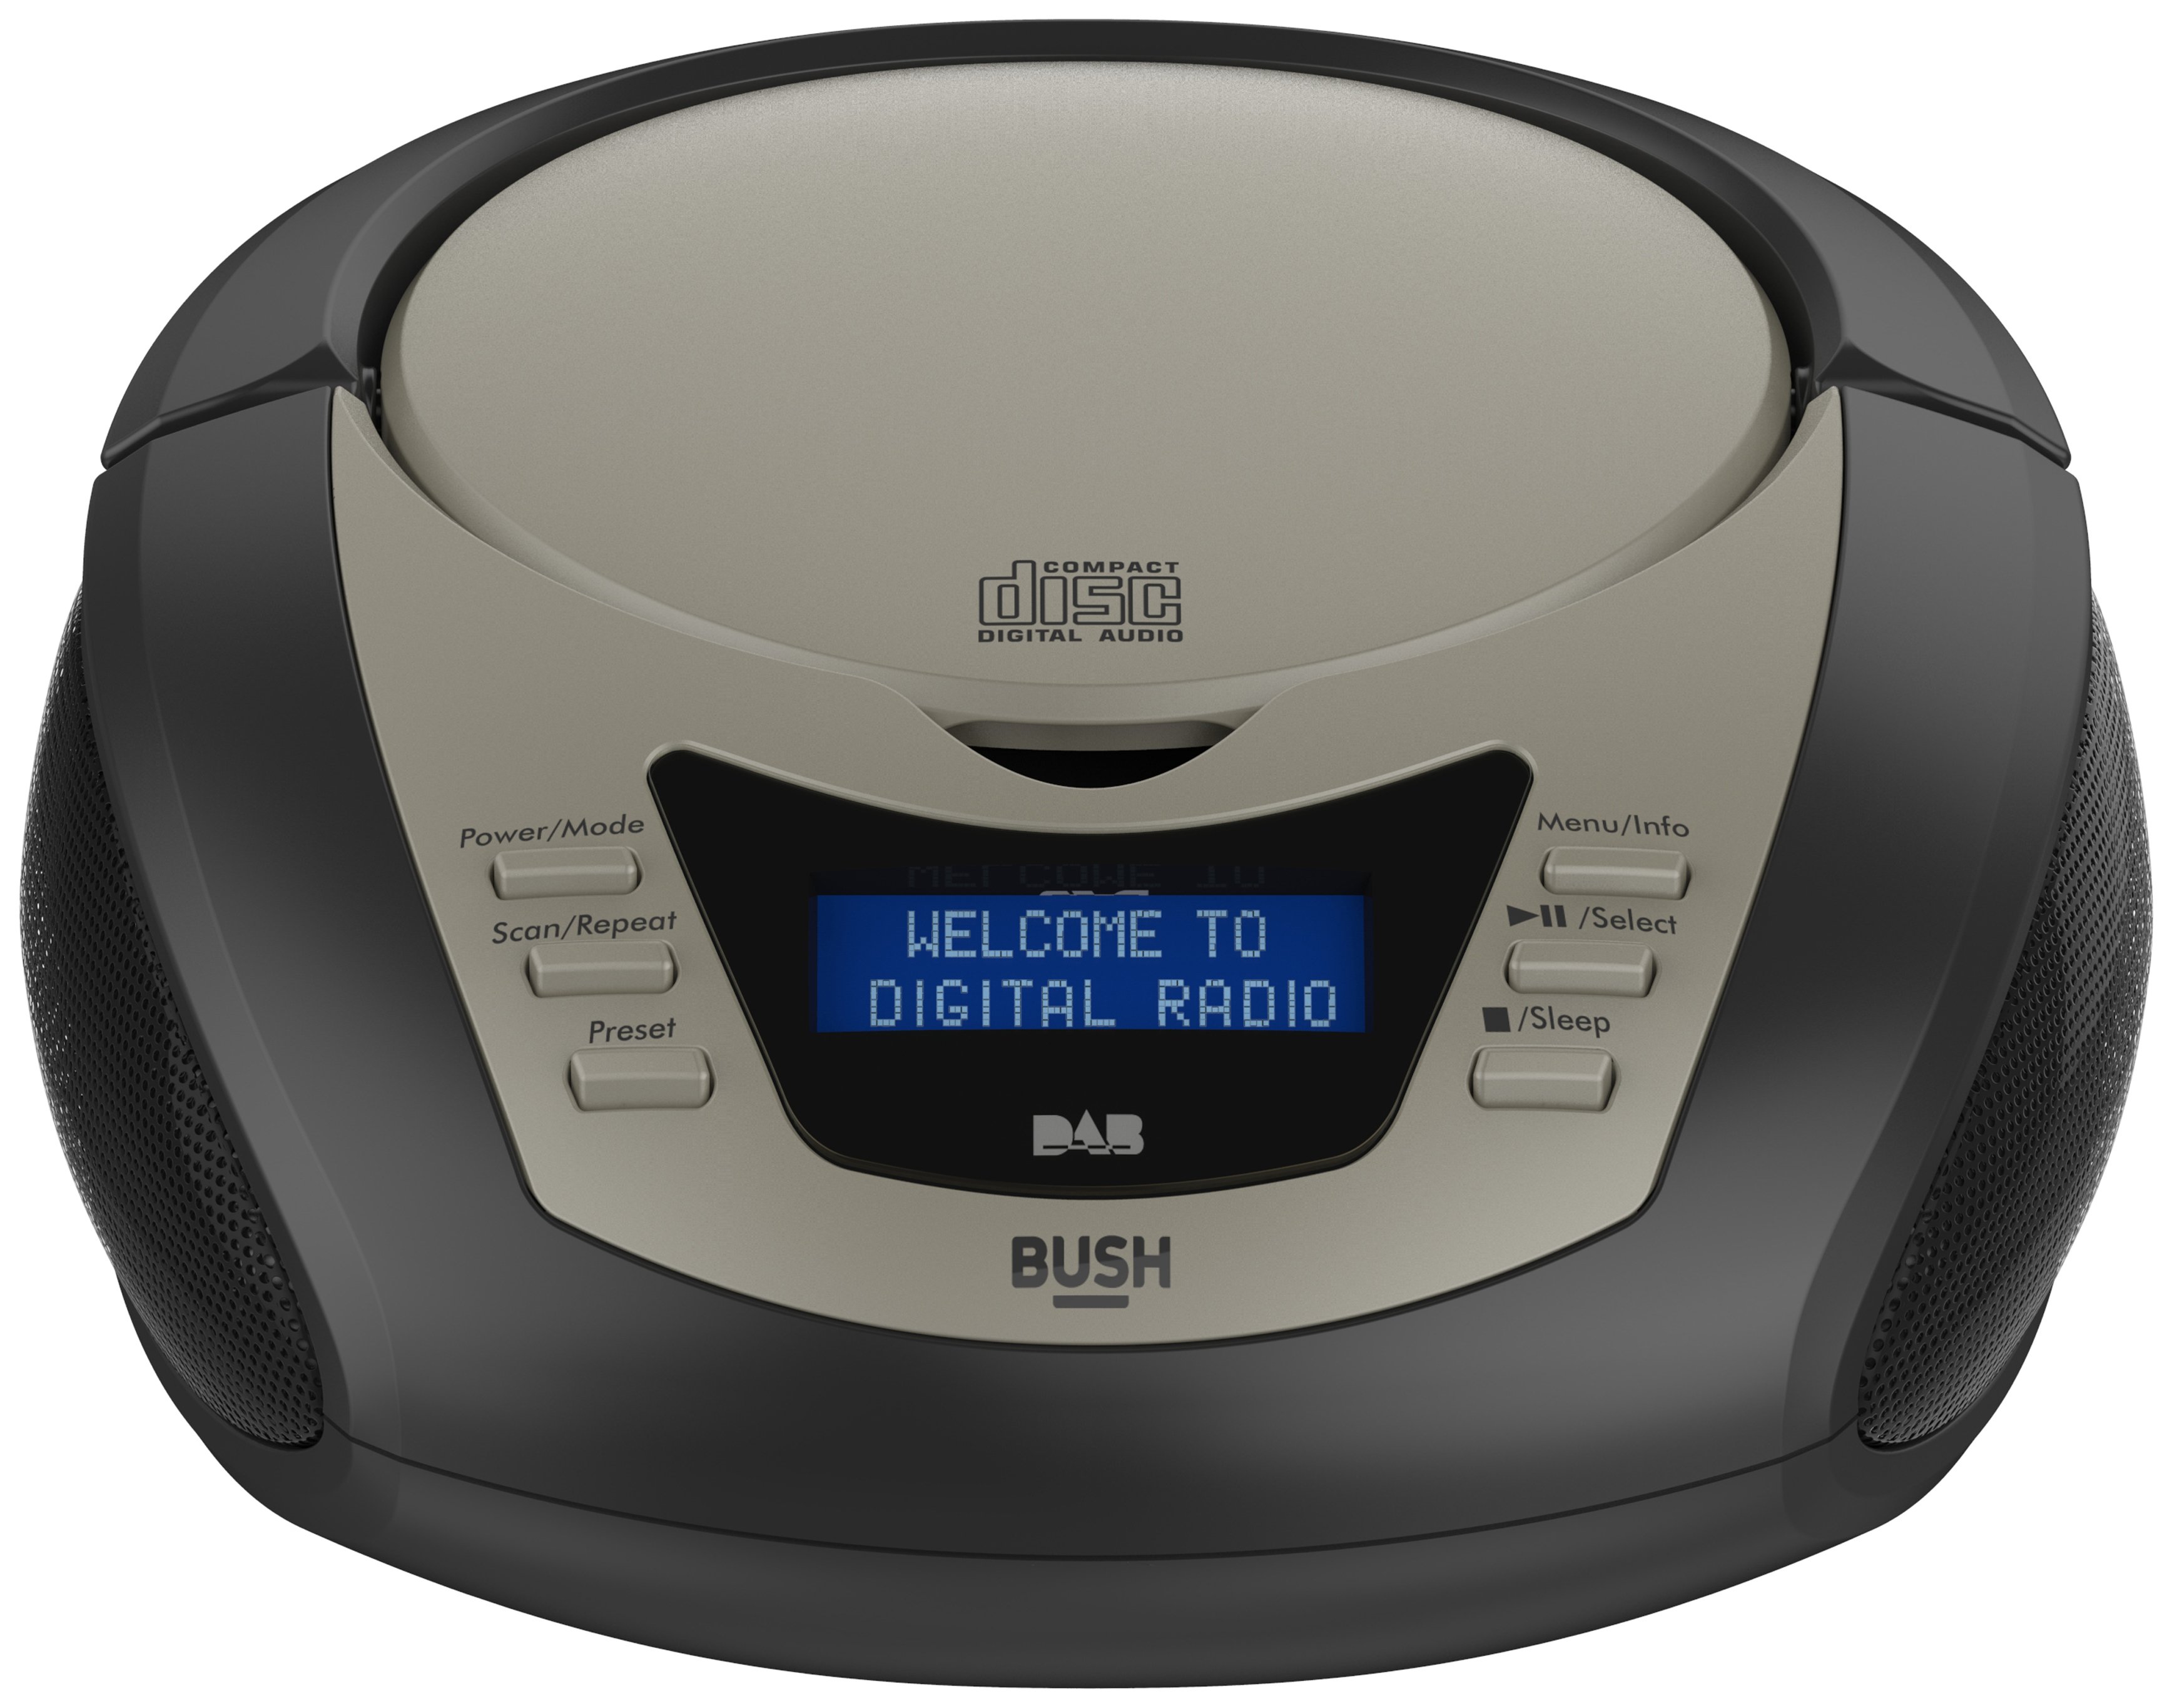 Bush DAB Boombox with CD Player - Black